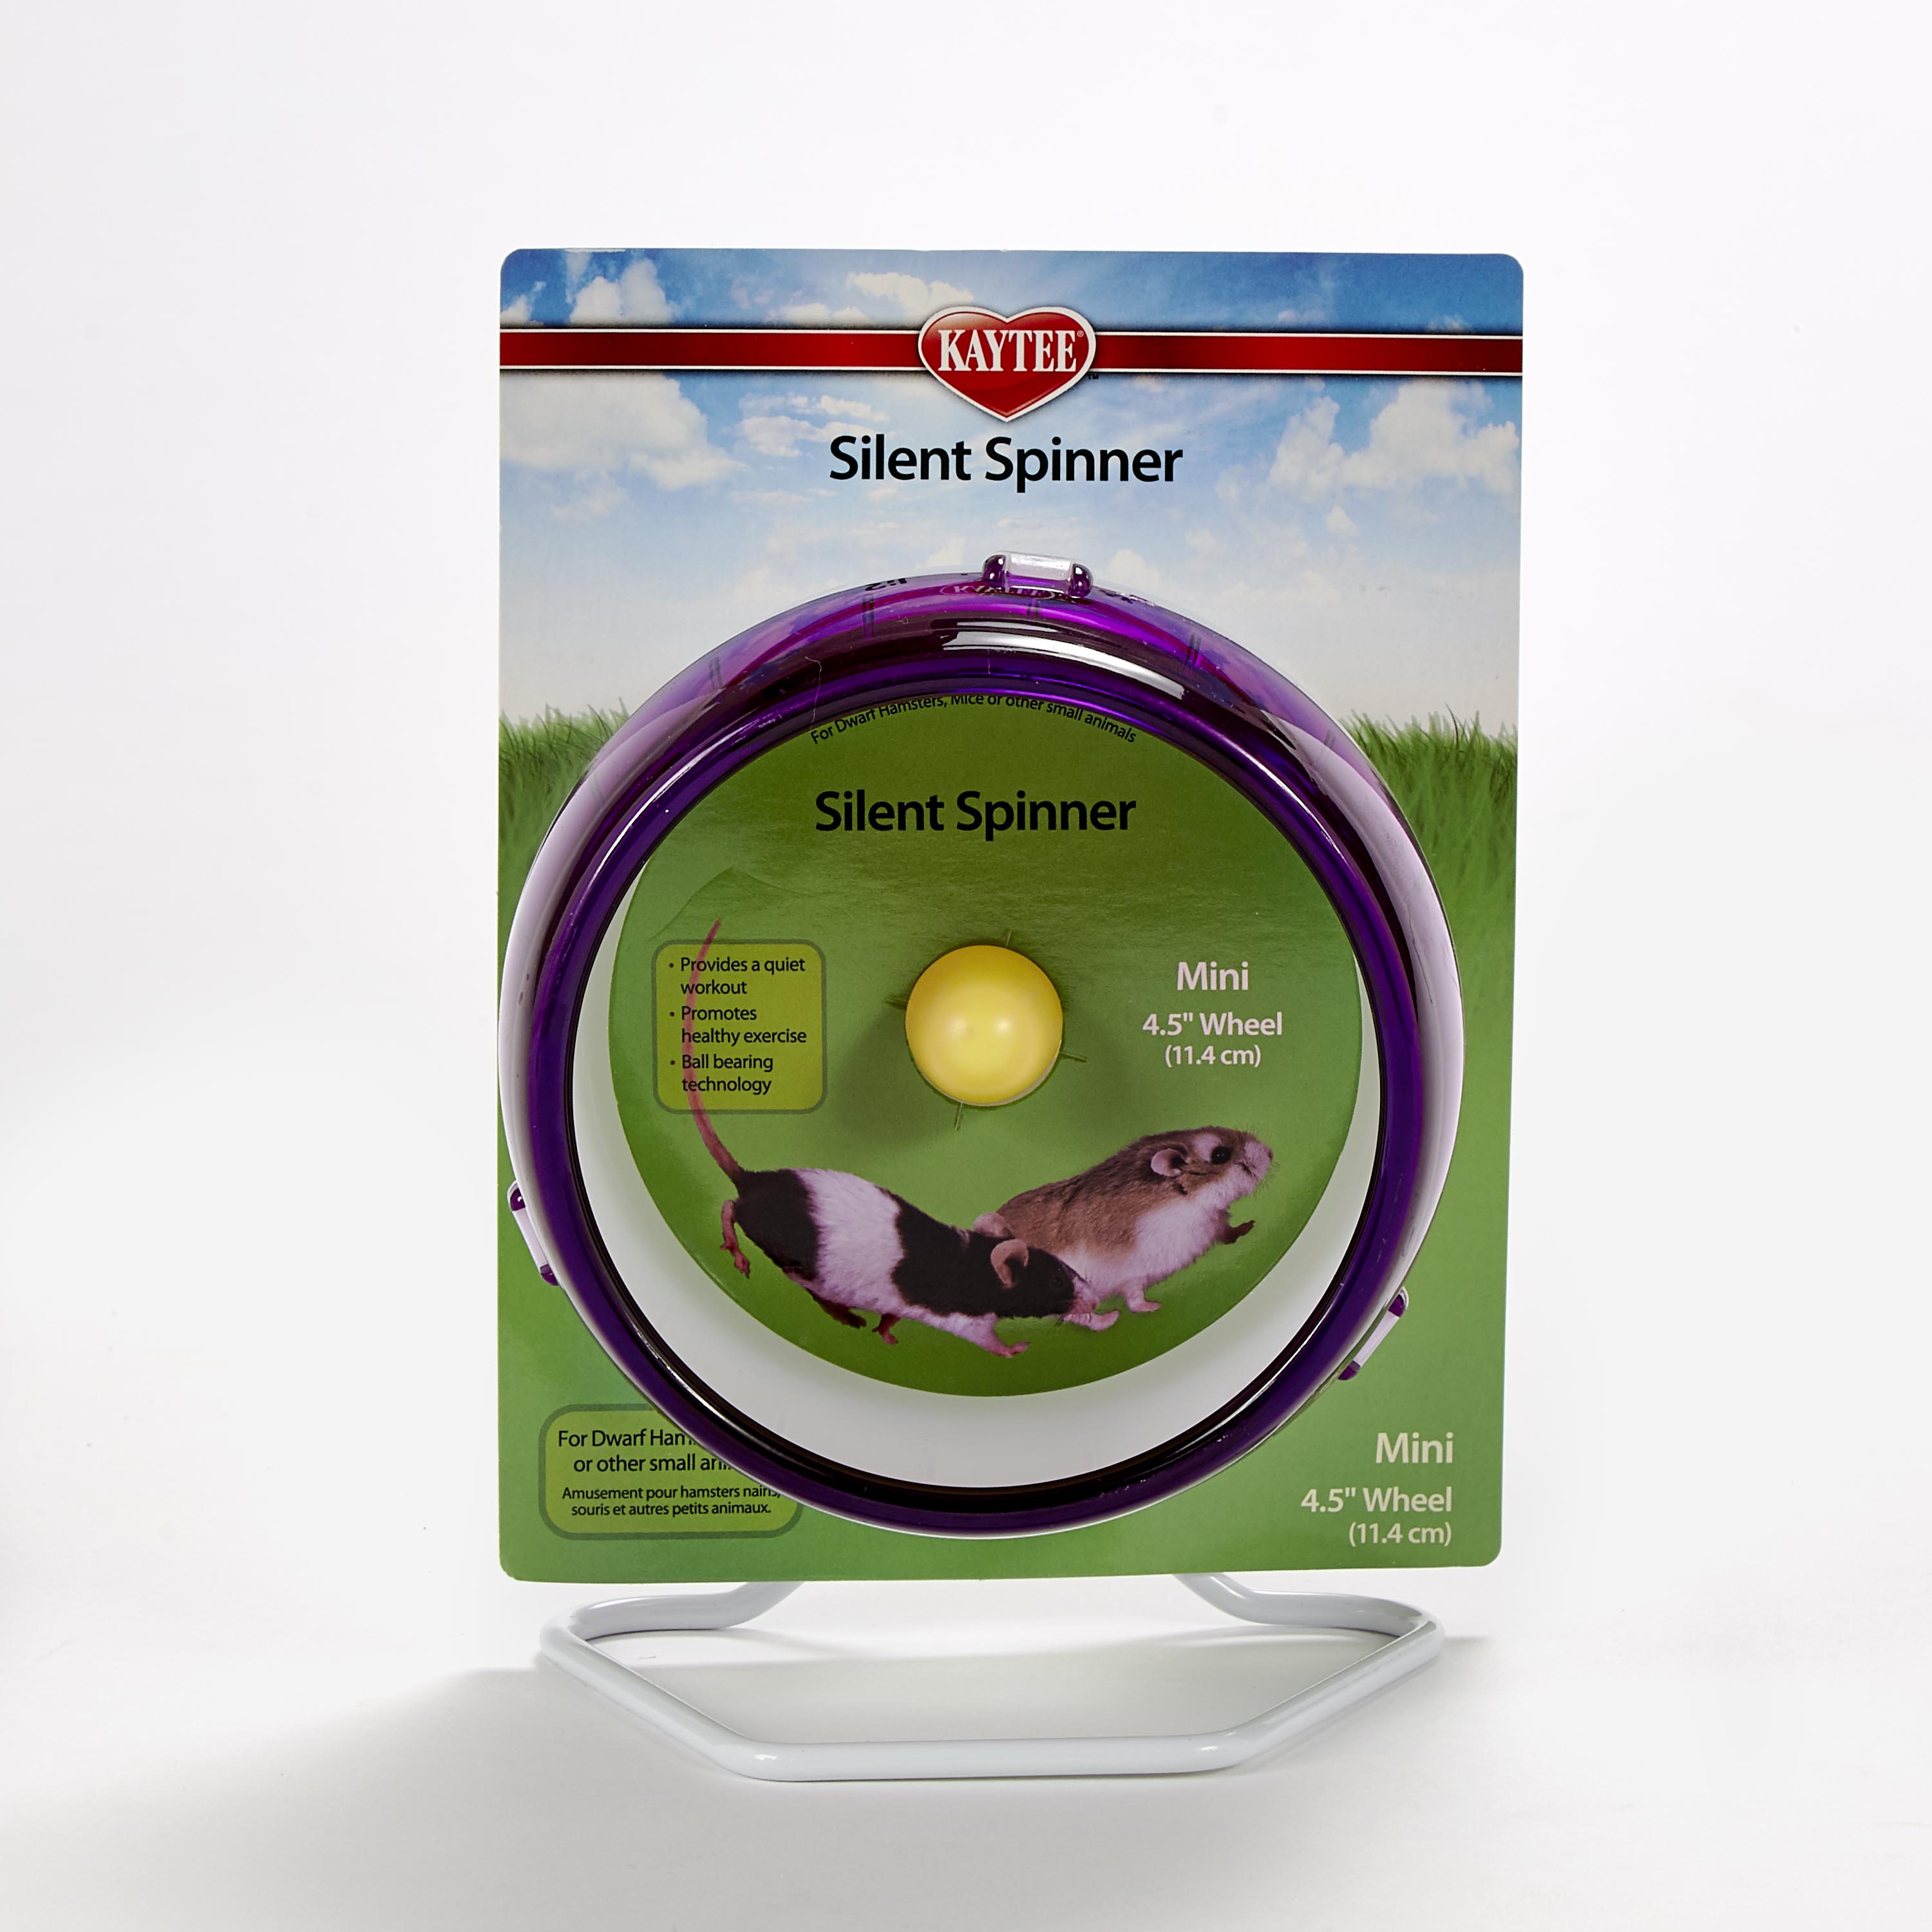 Kaytee Silent Spinner Wheel Mini Assorted Colors 3.25″ x 5.12″ x 7.25″